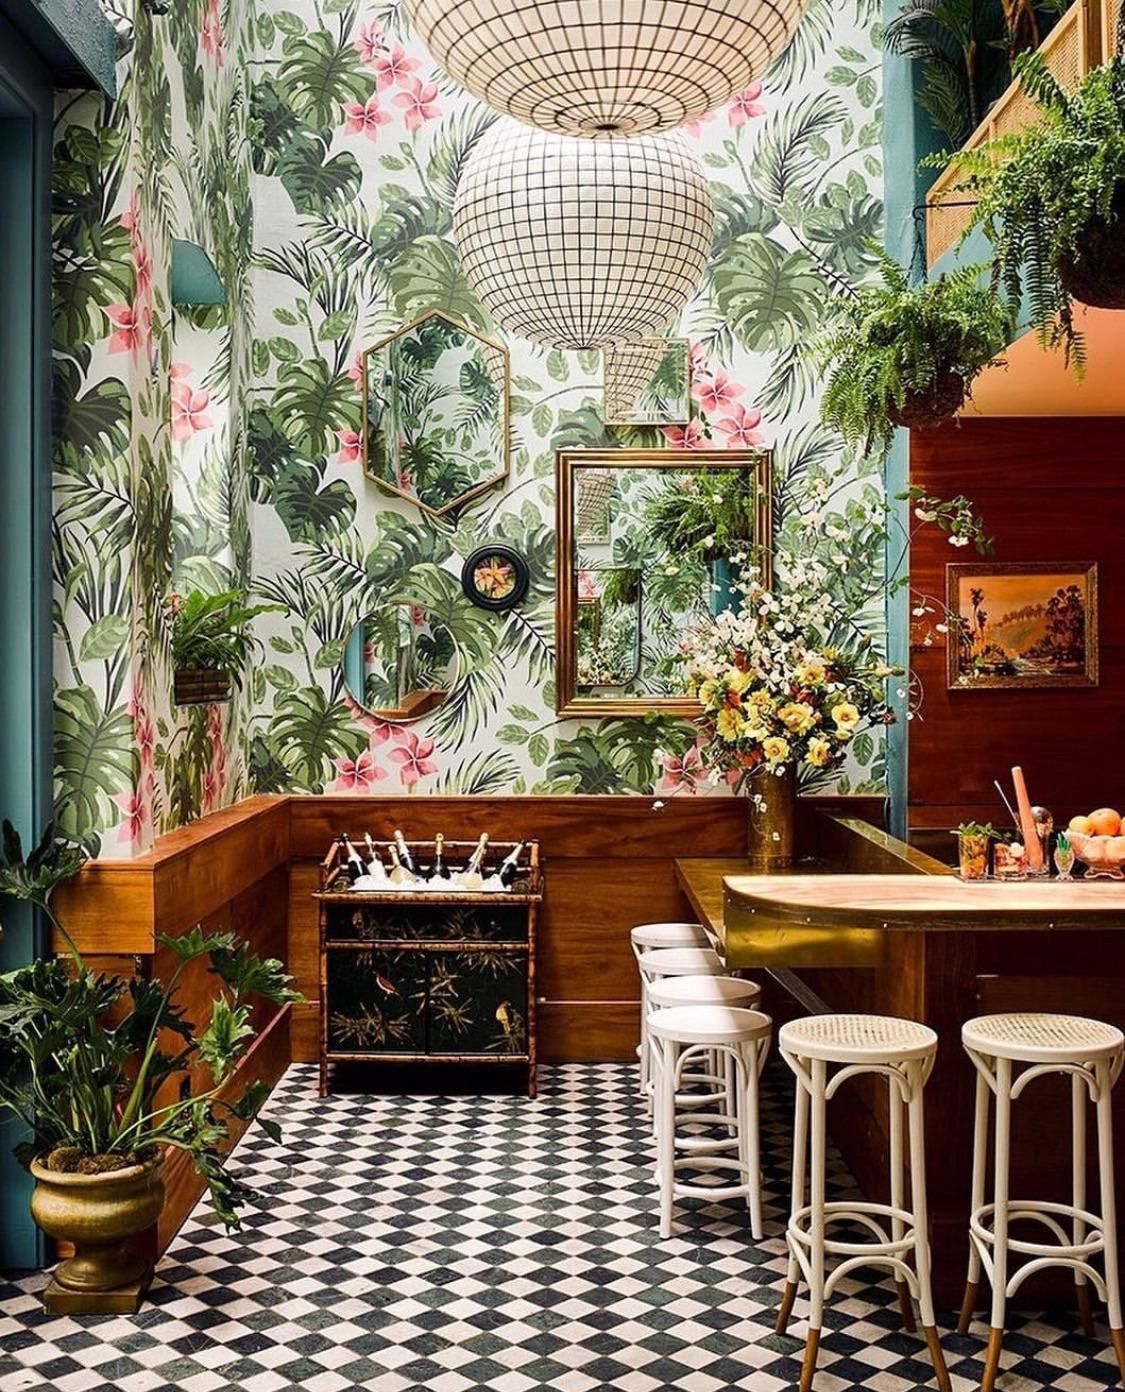 Hotel Jardin Tropical Frais Leo S Oyster Bar In San Francisco California Designed by